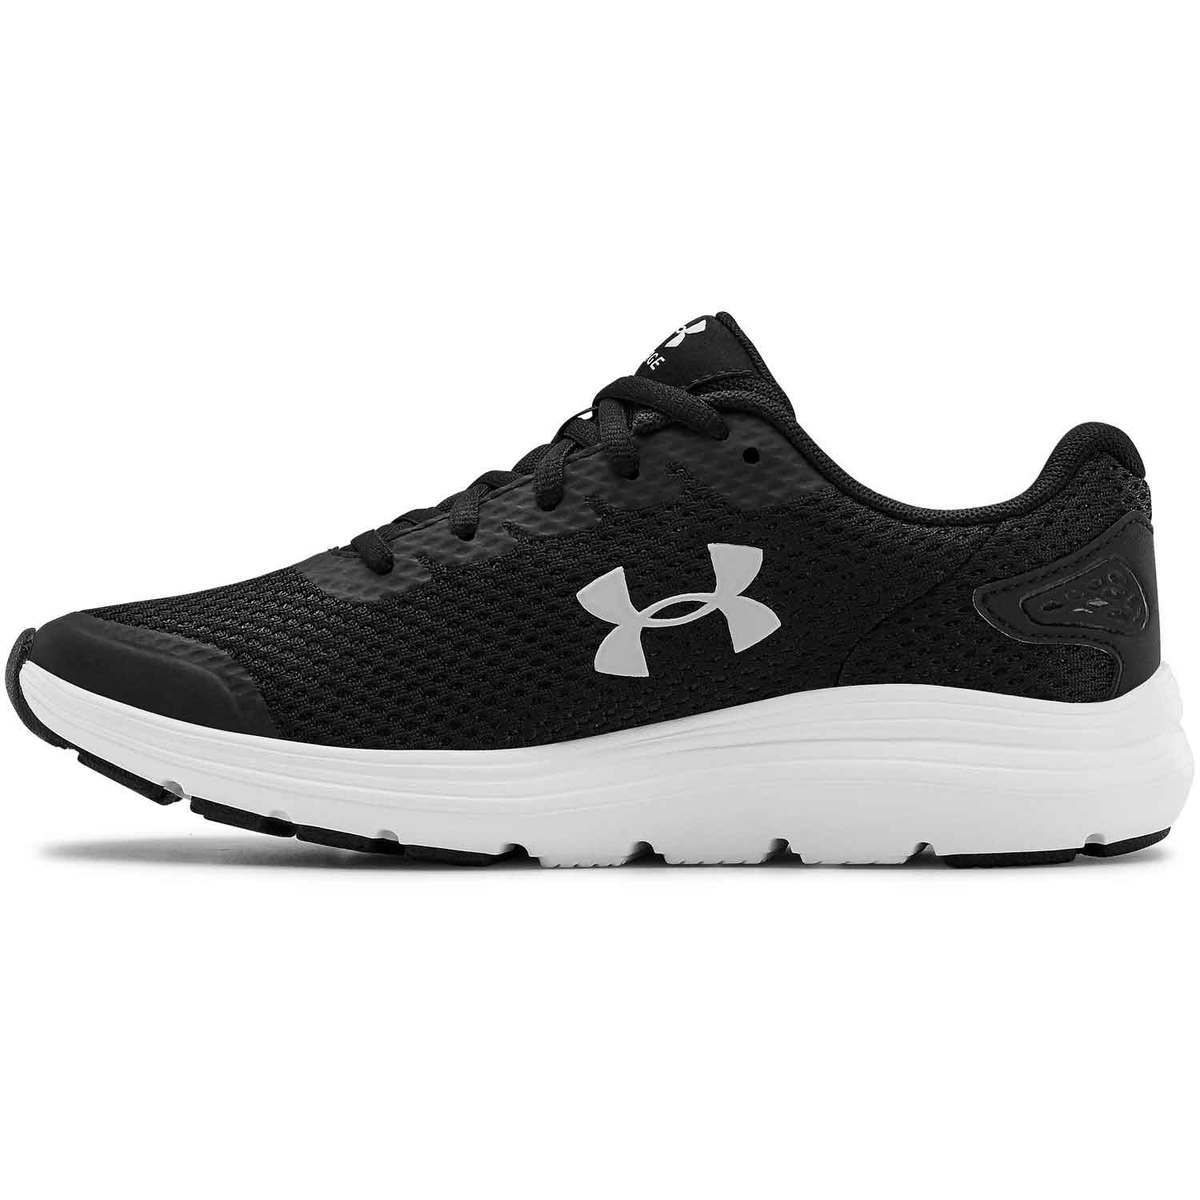 Under Armour Women's Surge 2 Running Shoes - Black - Size 10 - Black 10 ...